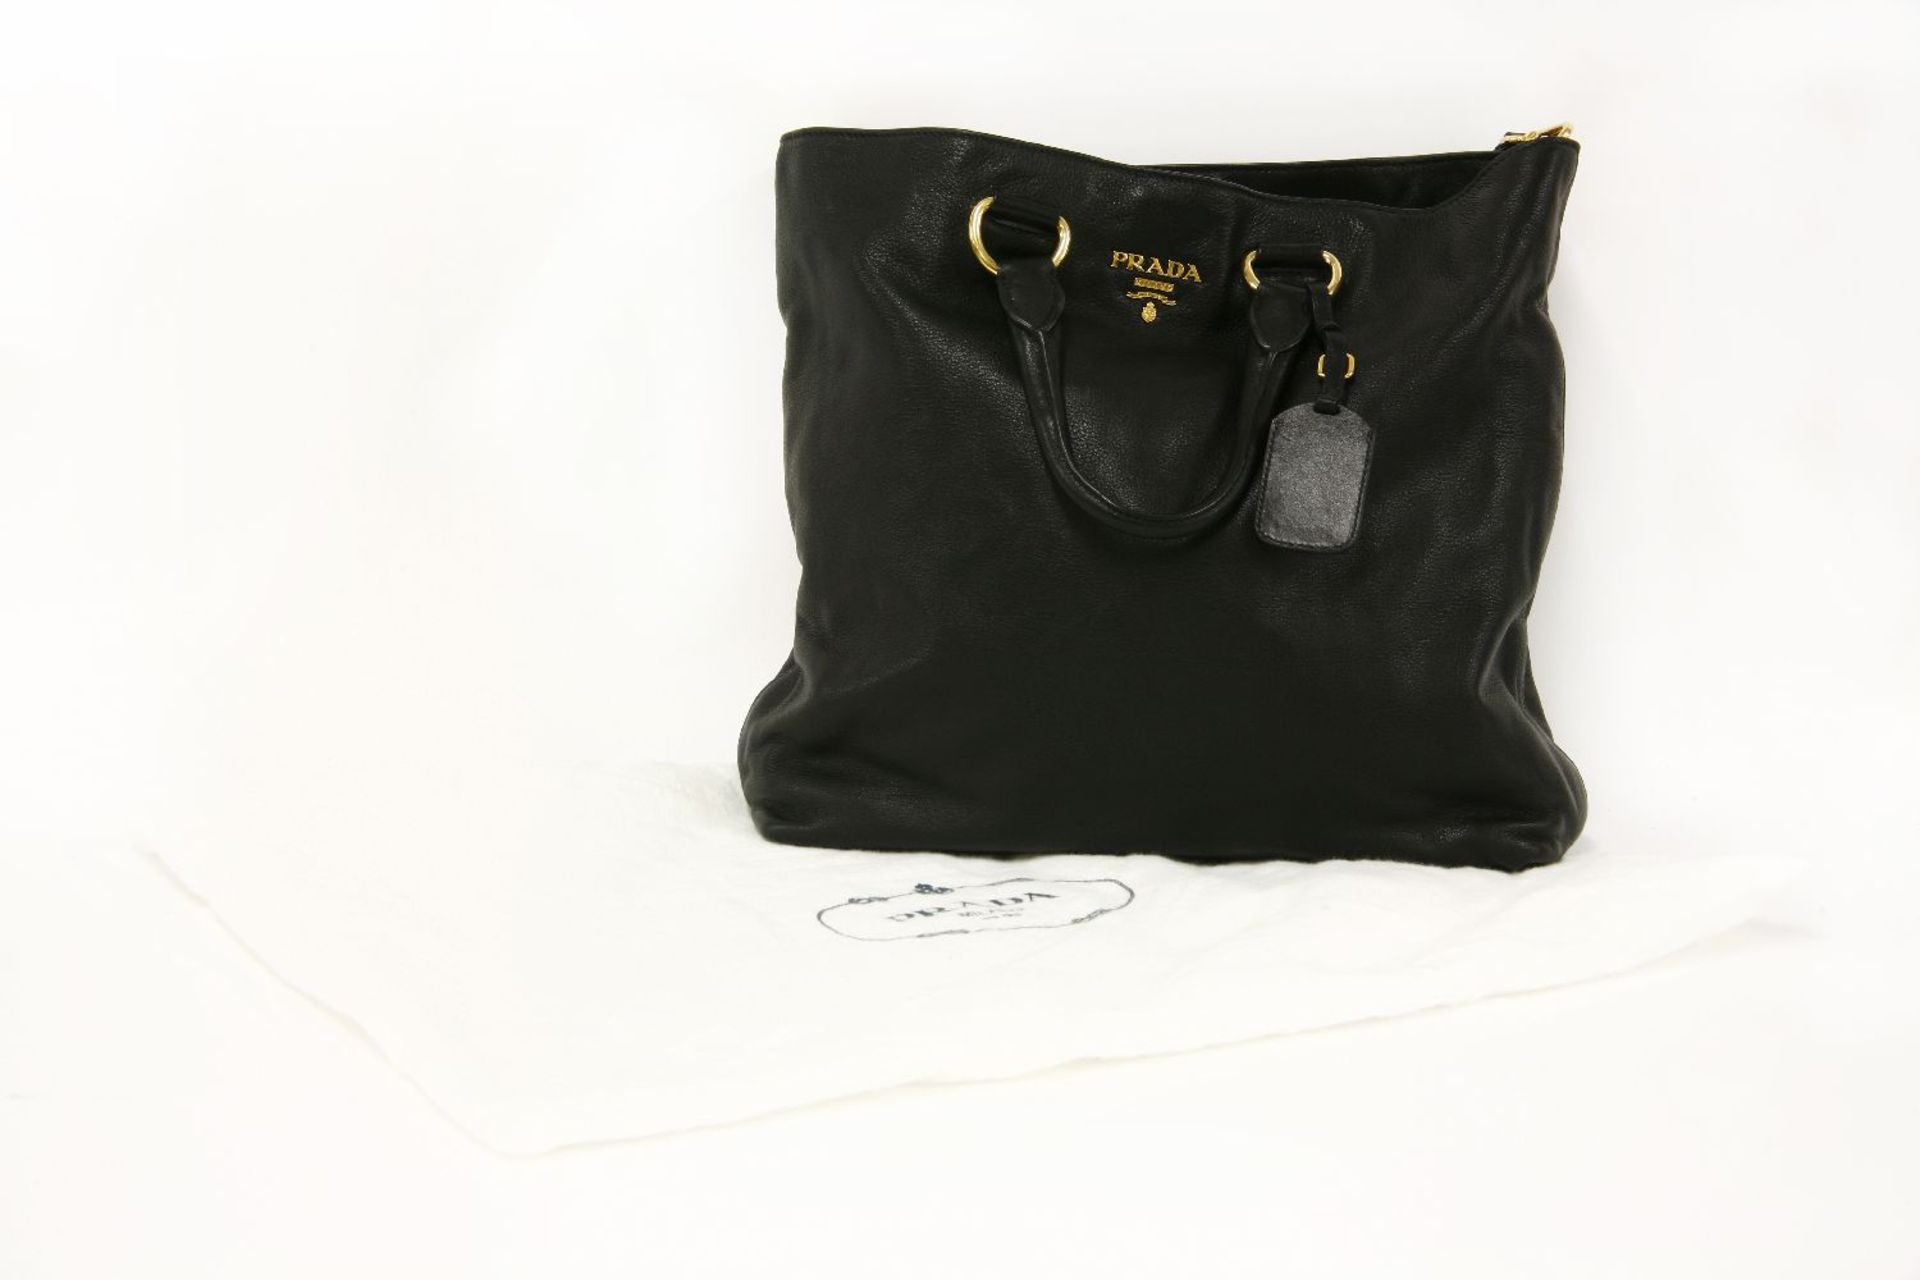 A Prada black leather handbag,featuring a black pebbled leather exterior, gold-tone hardware - Bild 2 aus 2